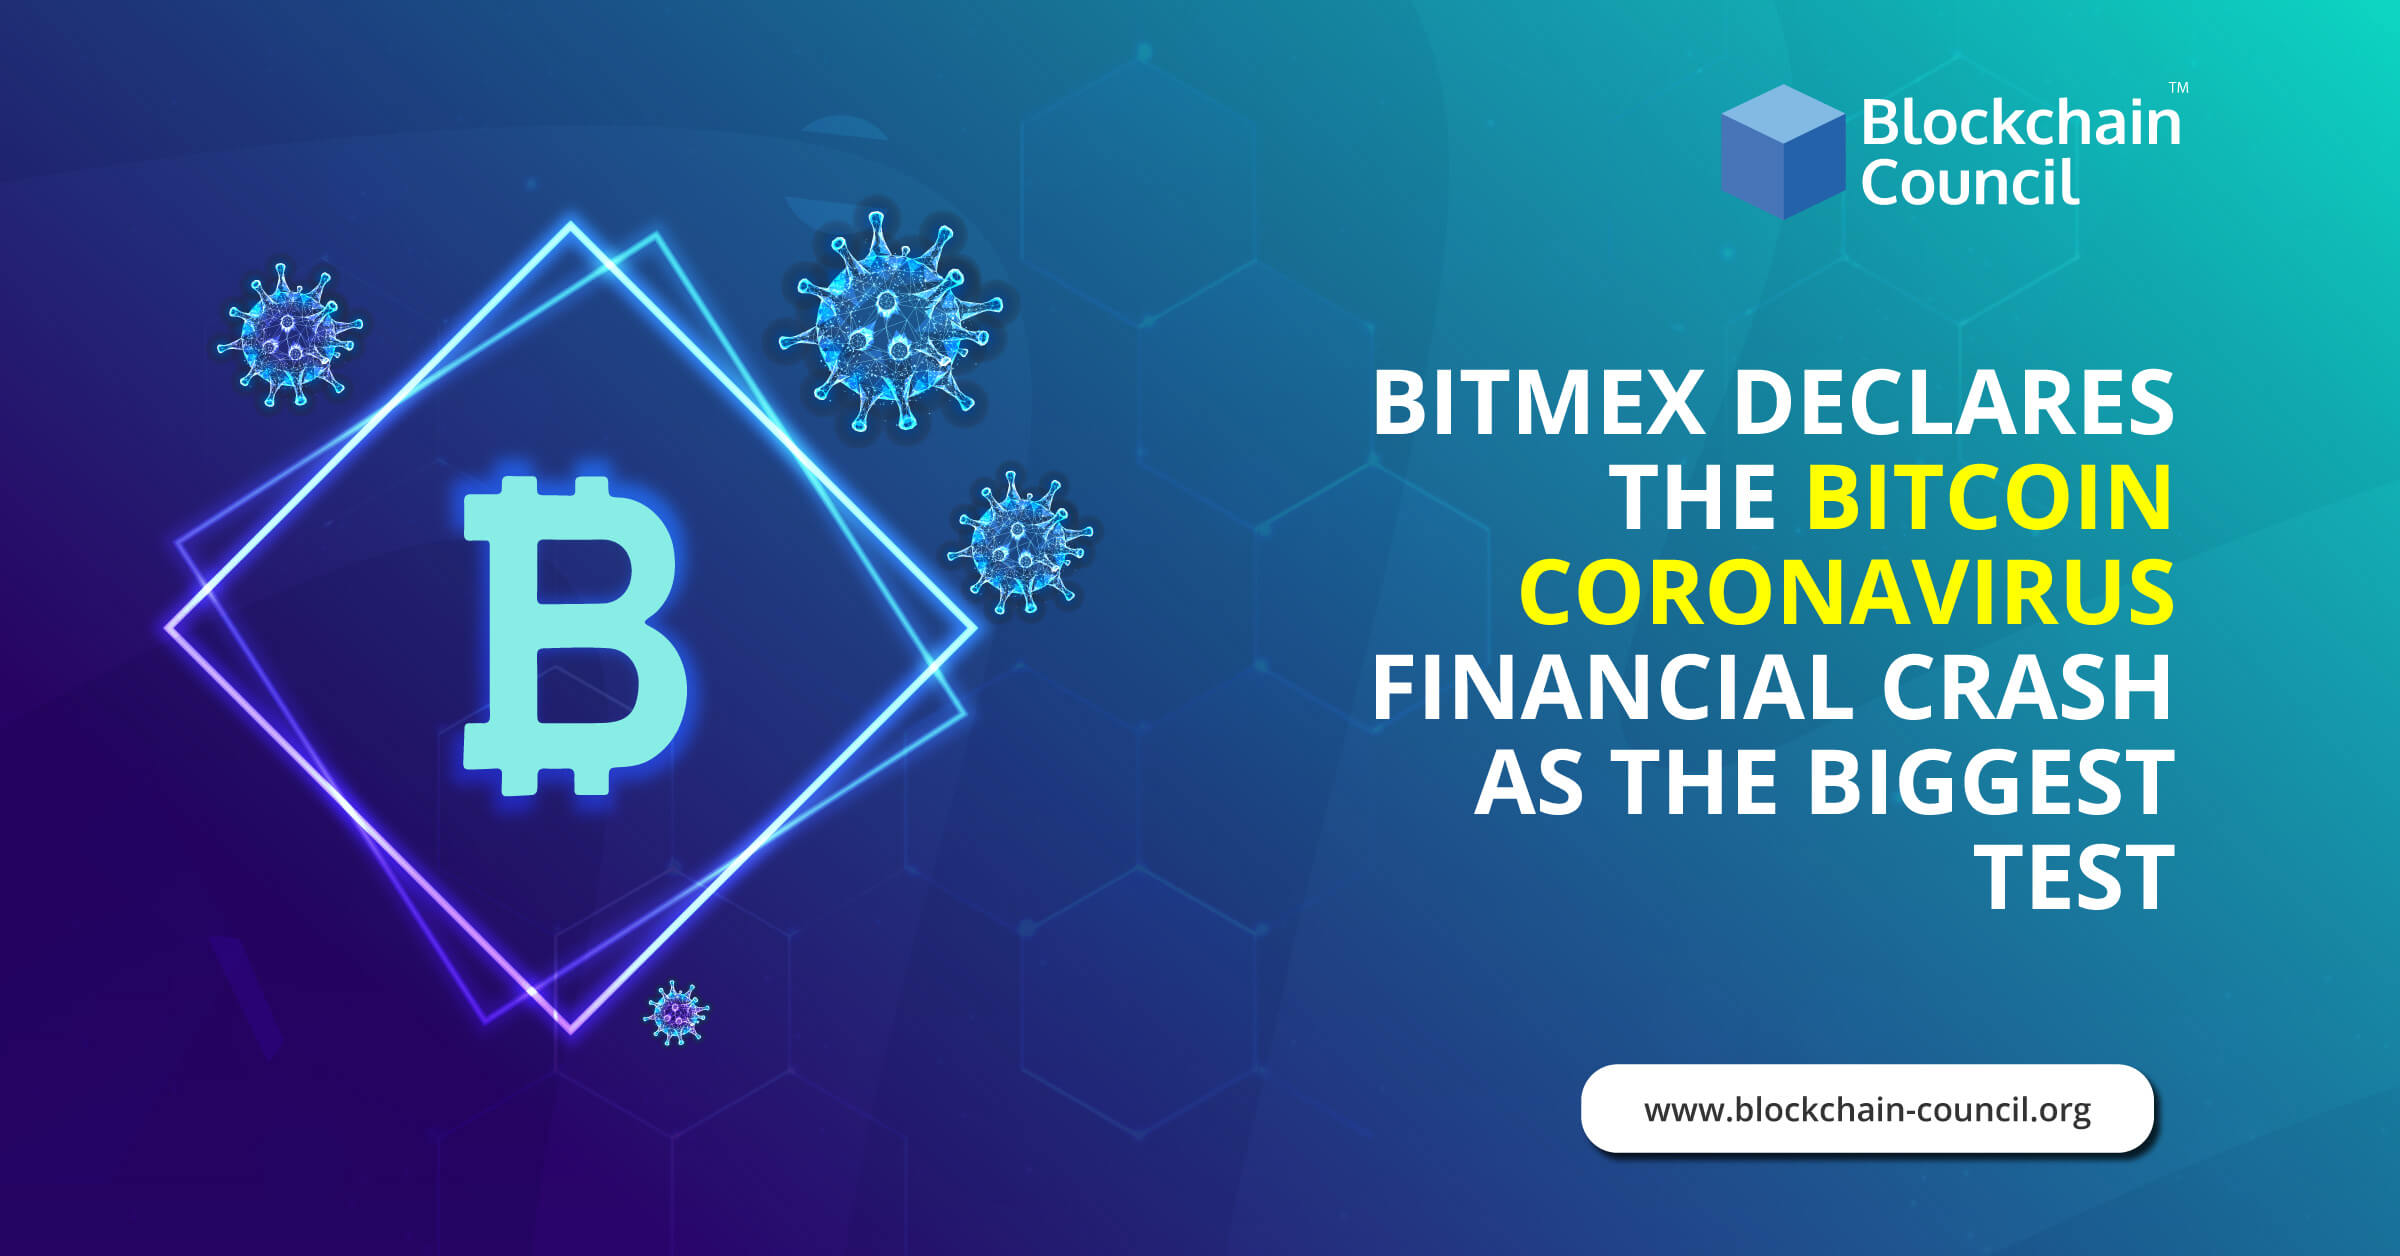 Bitmex Declares the Bitcoin Coronavirus Financial Crash as the Biggest Test